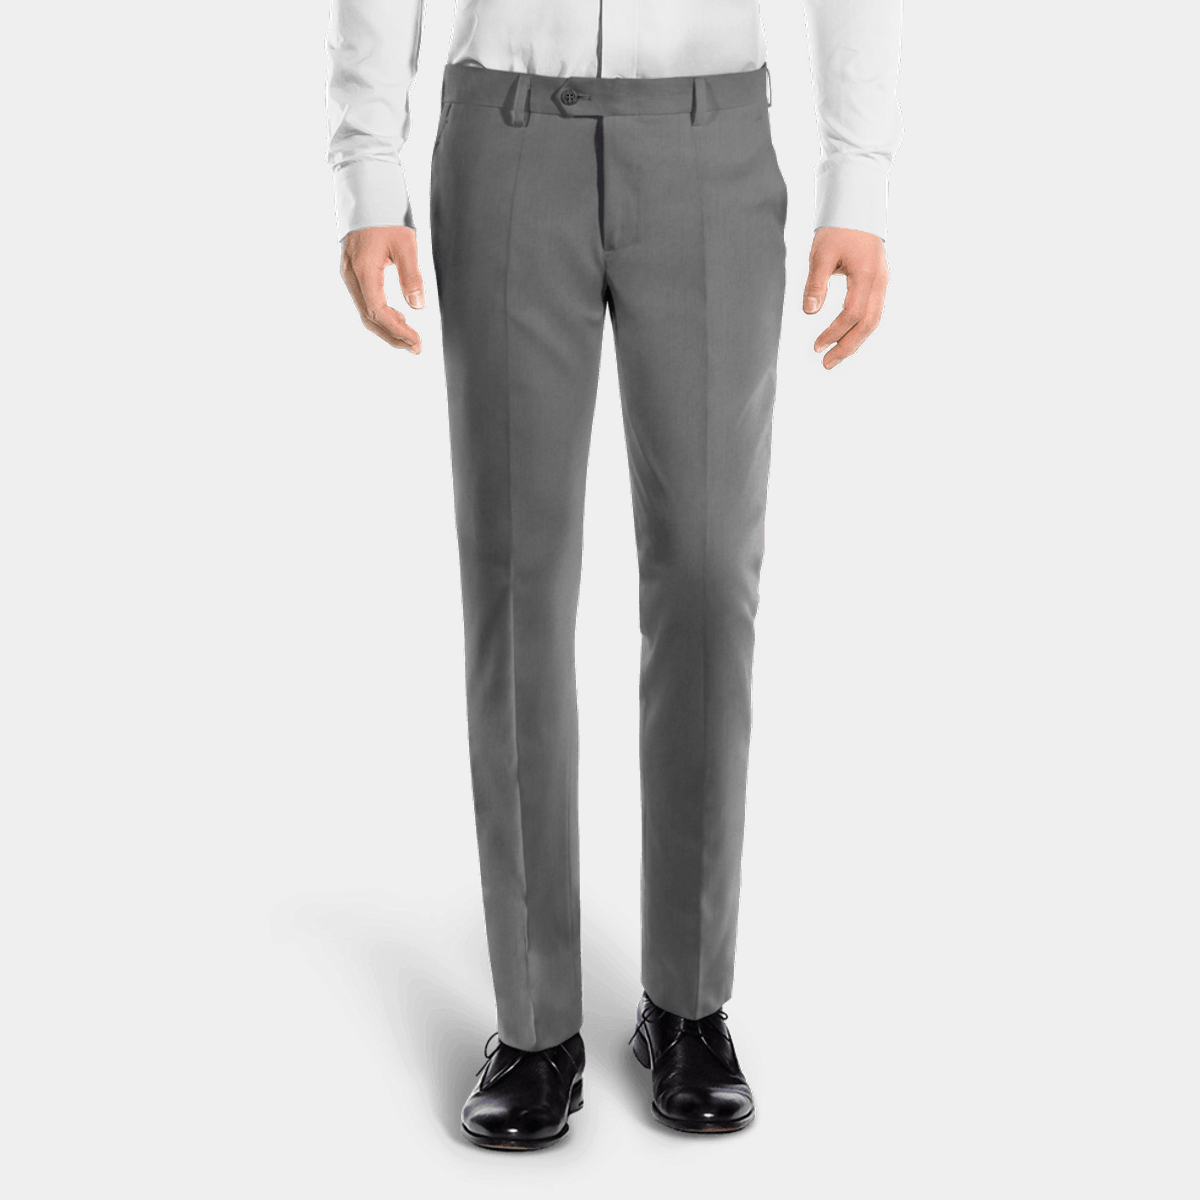 Medium Grey Textured Trousers - Selling Fast at Pantaloons.com